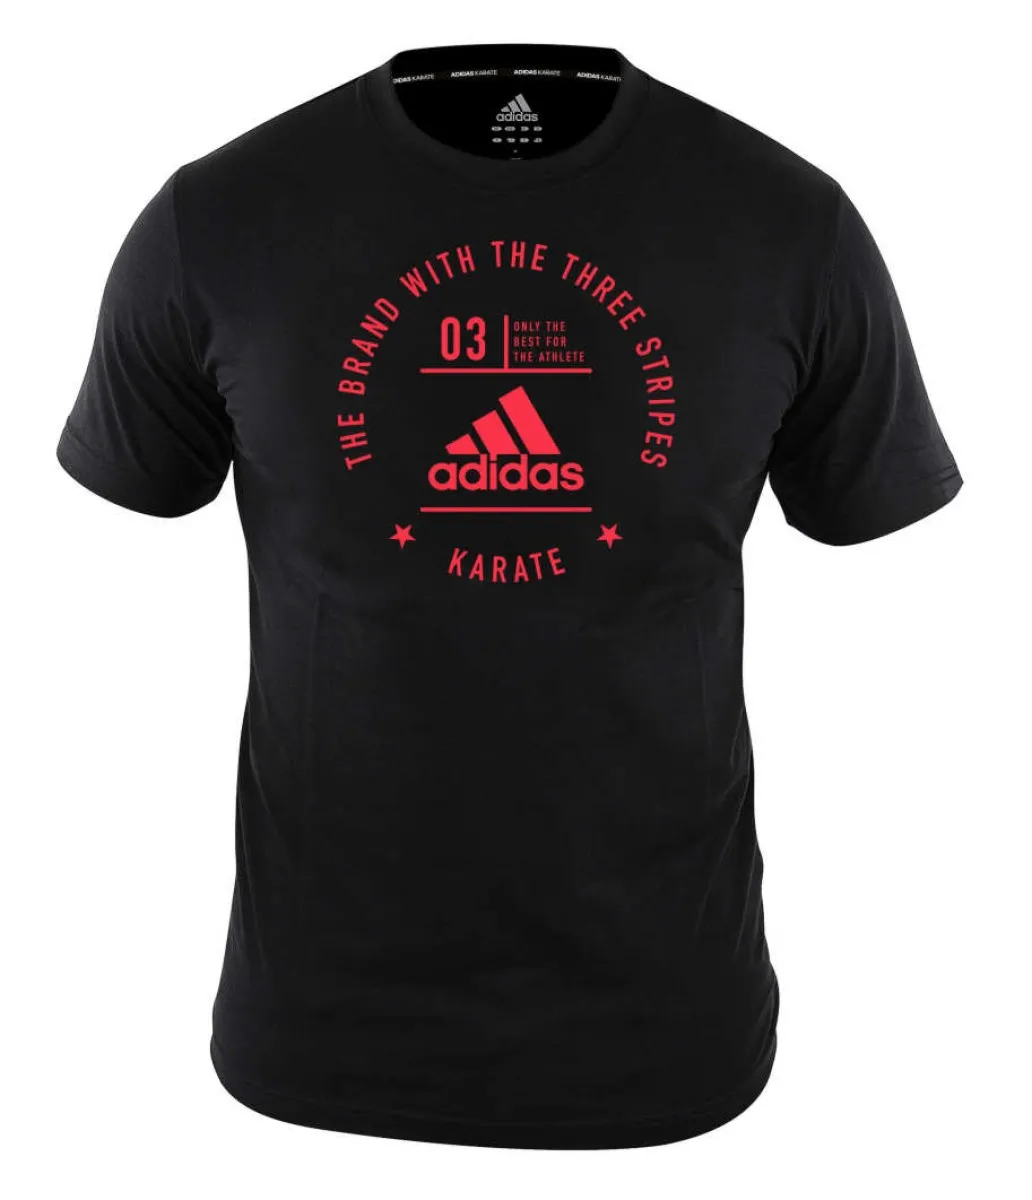 adidas Community T-Shirt Karate black/red